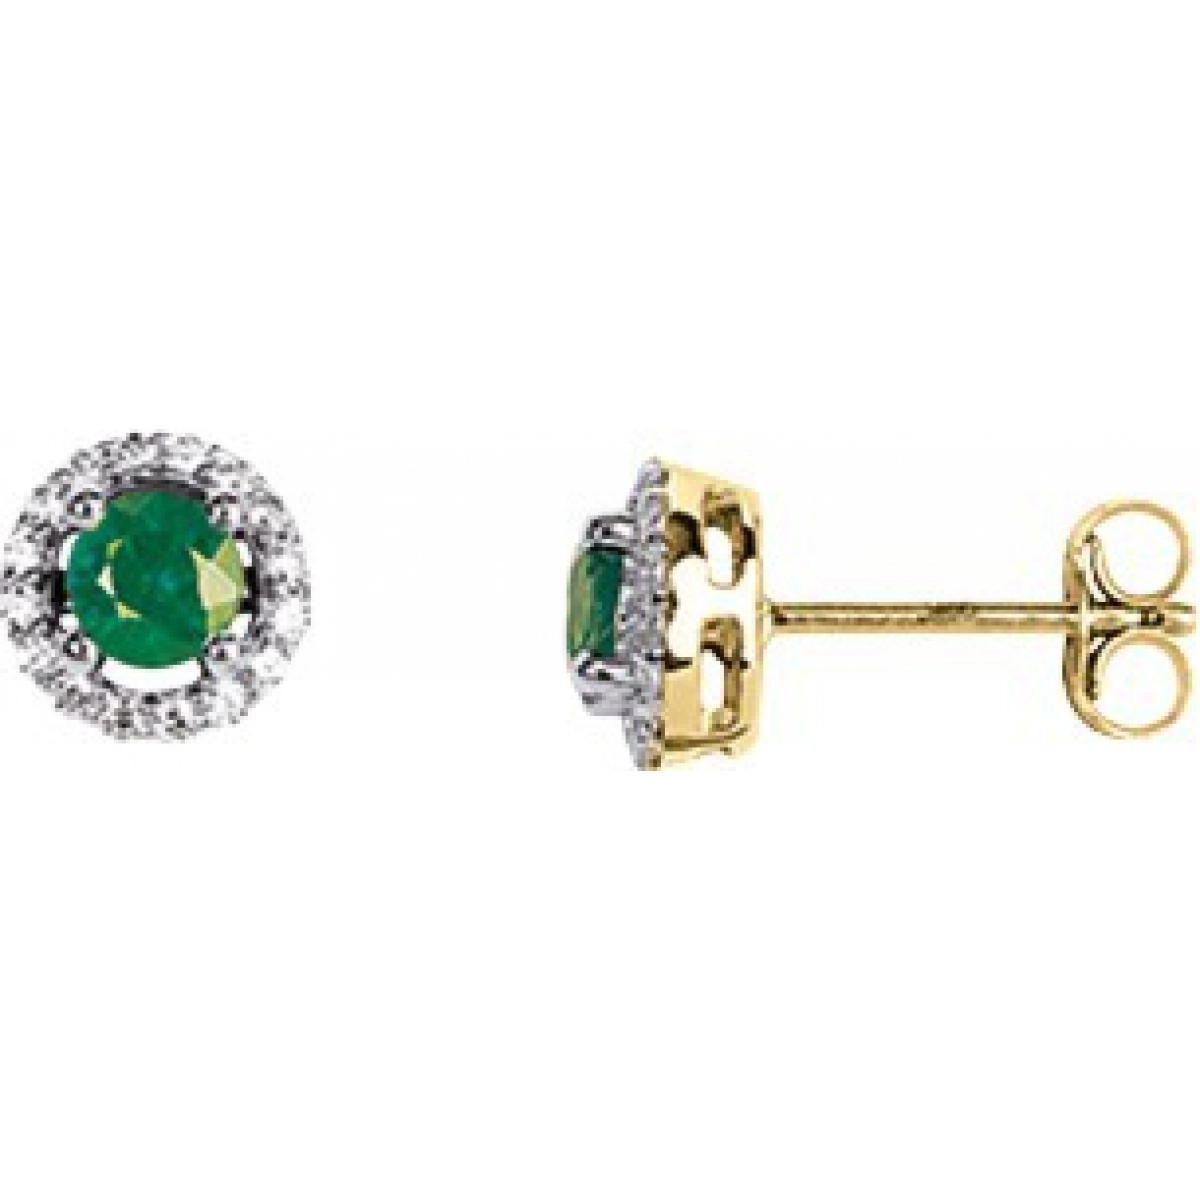 Earrings pair w. emerald and rhod 9K YG  Lua Blanca  293061.E3.0